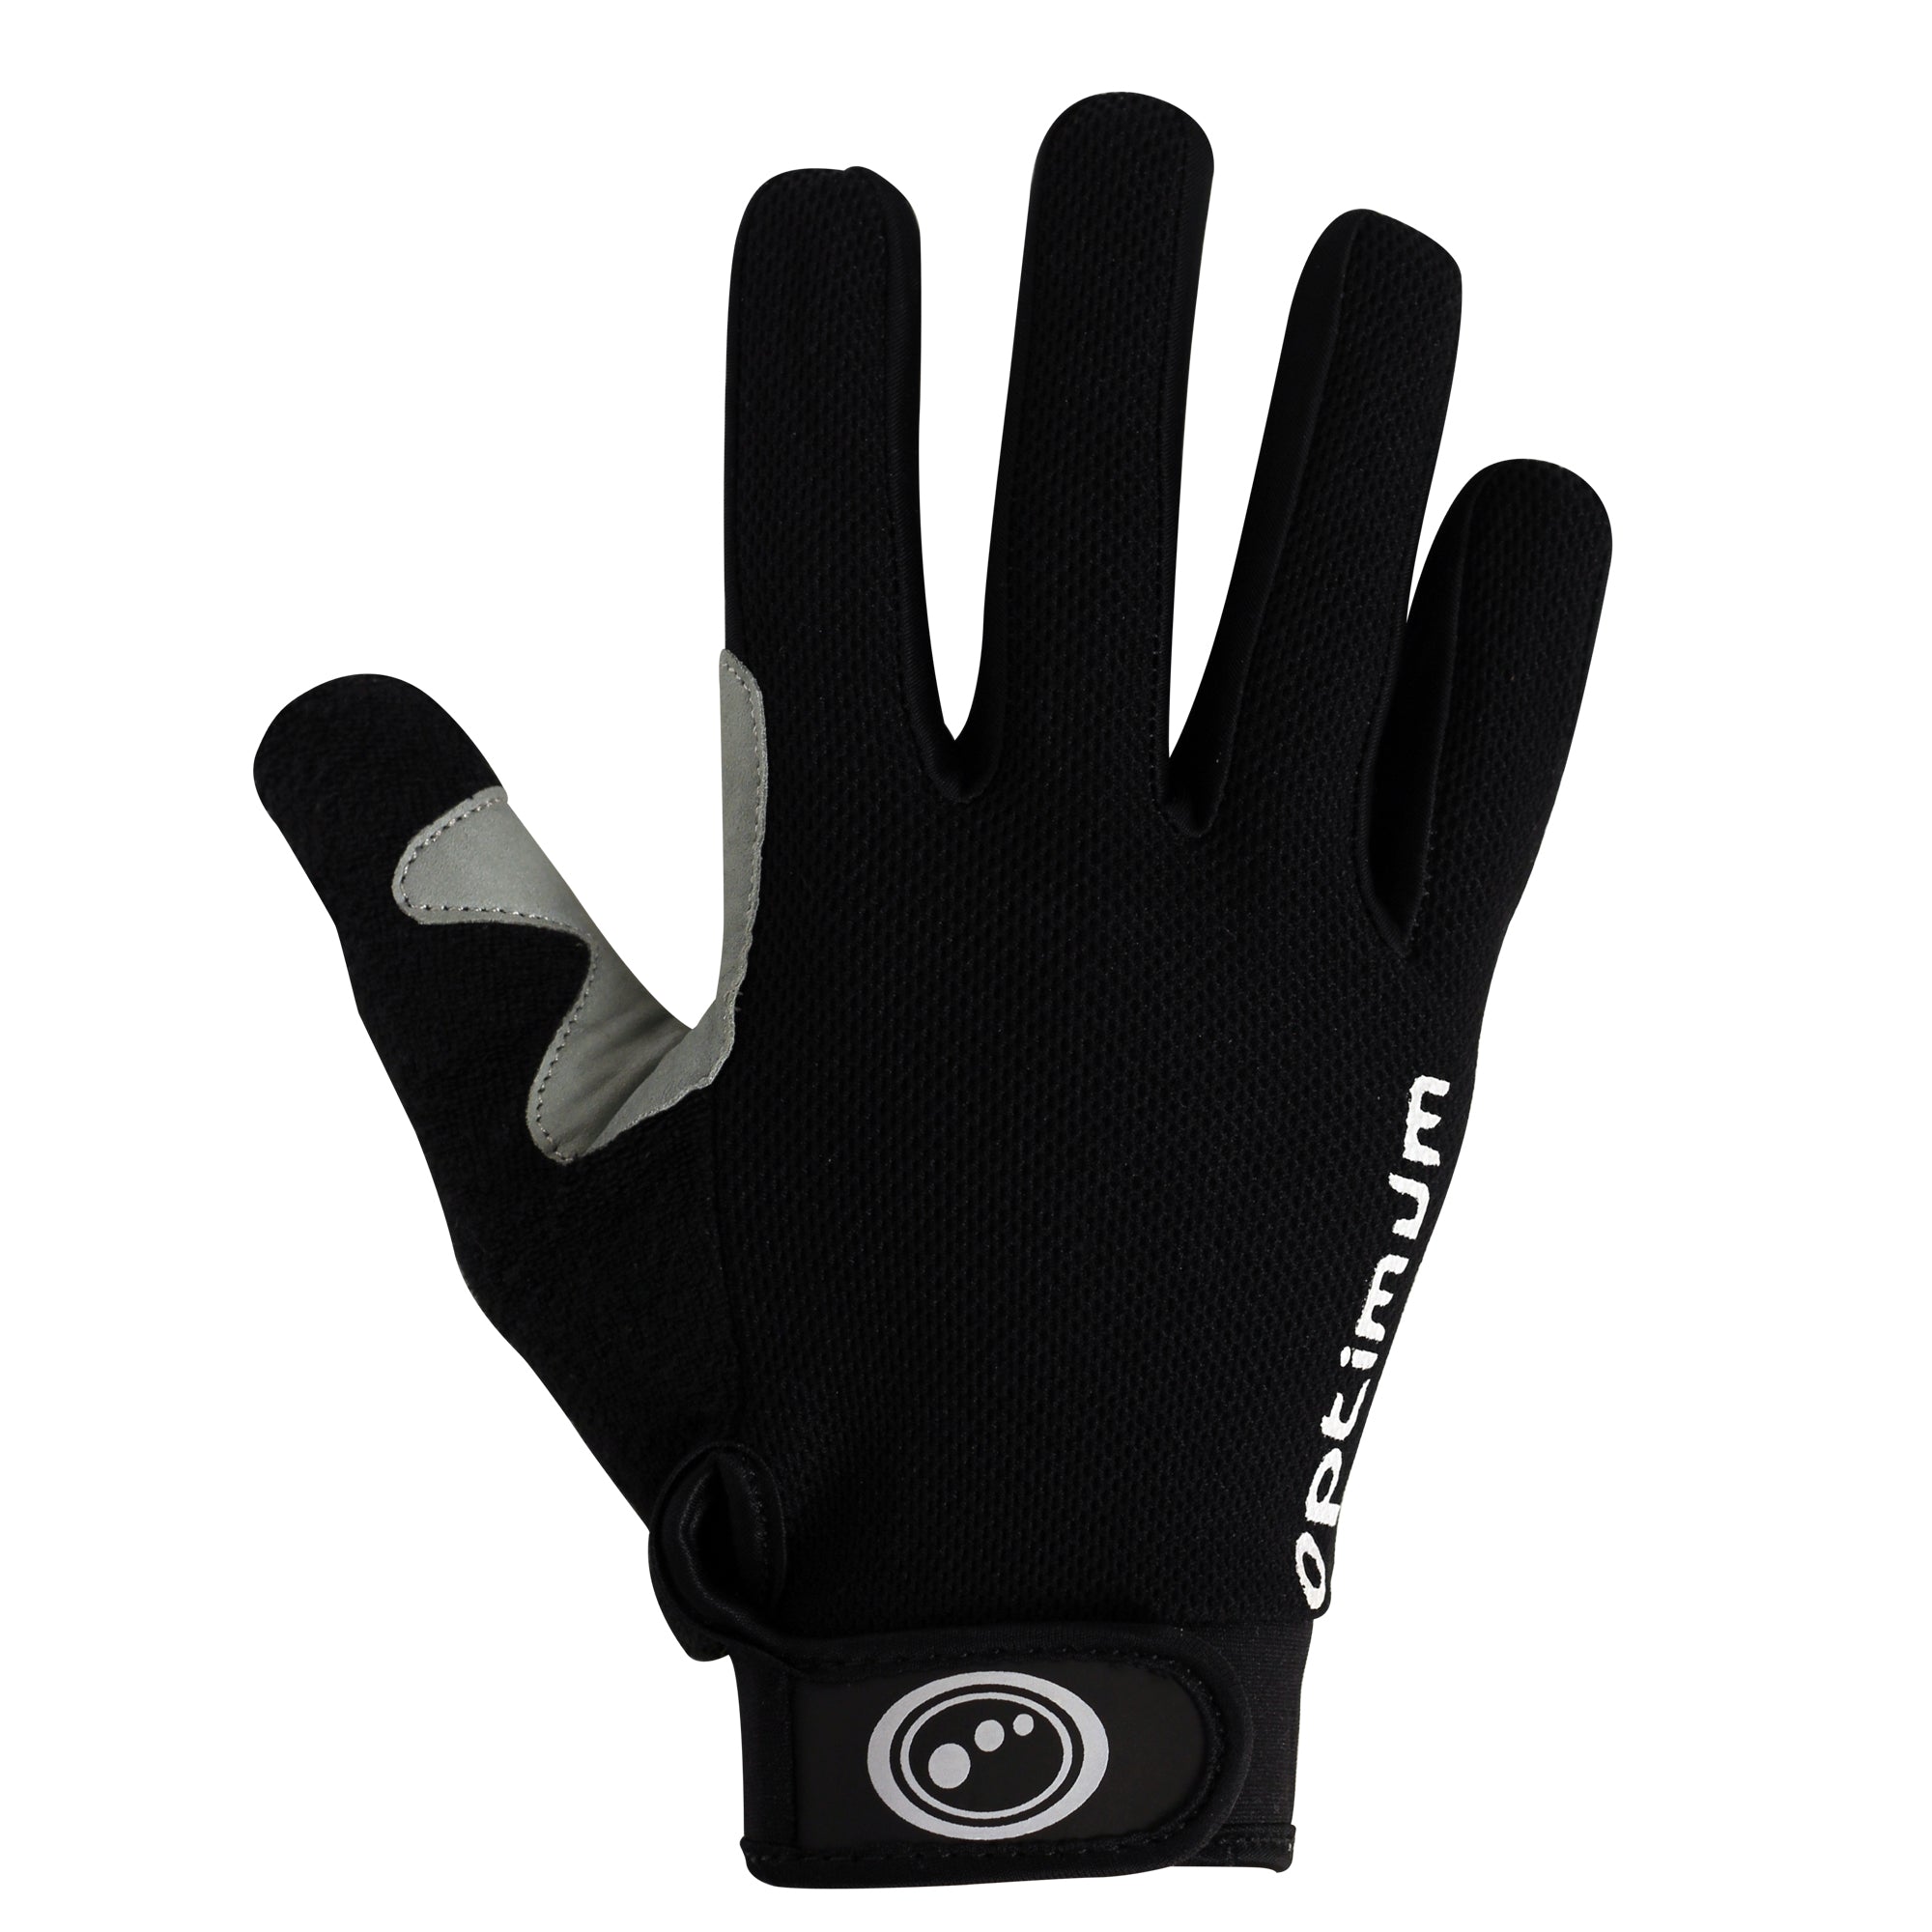 Hawkley MTB Gloves - Optimum